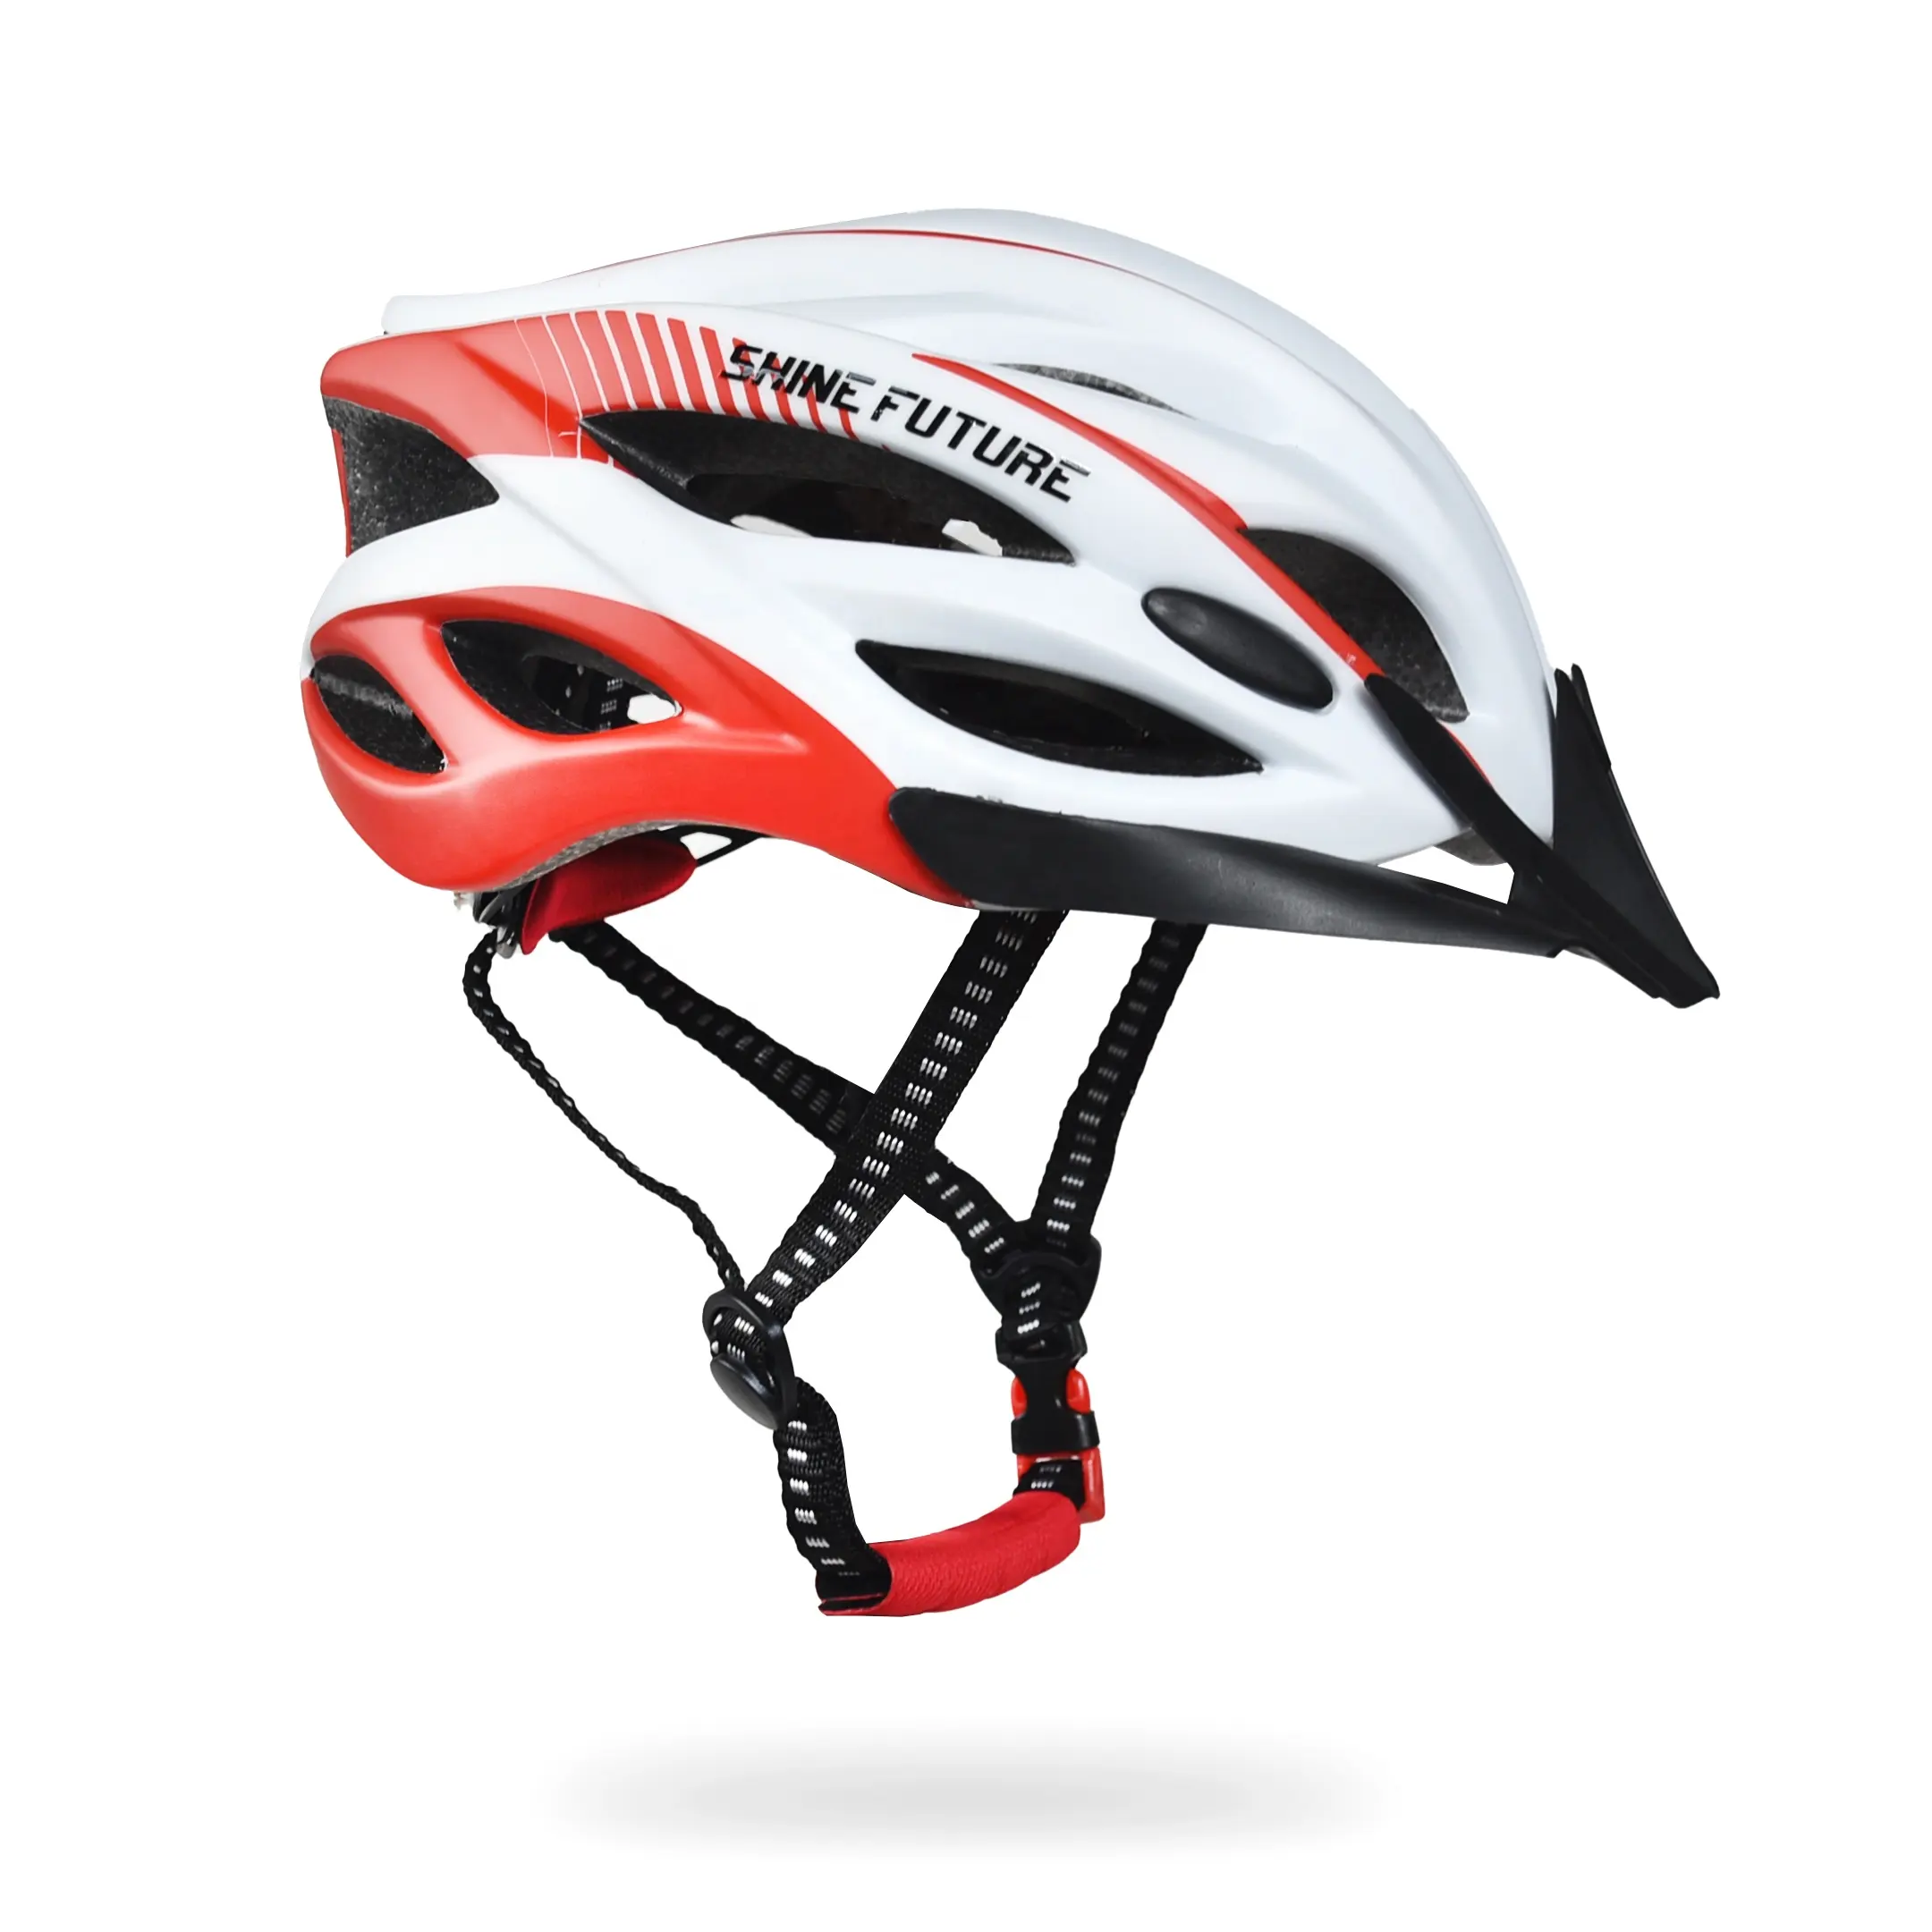 New Arrival Bicycle Road Mtb Sports Safety Helmet Mountain Bike Skating Board Helmet for Adult Helmets